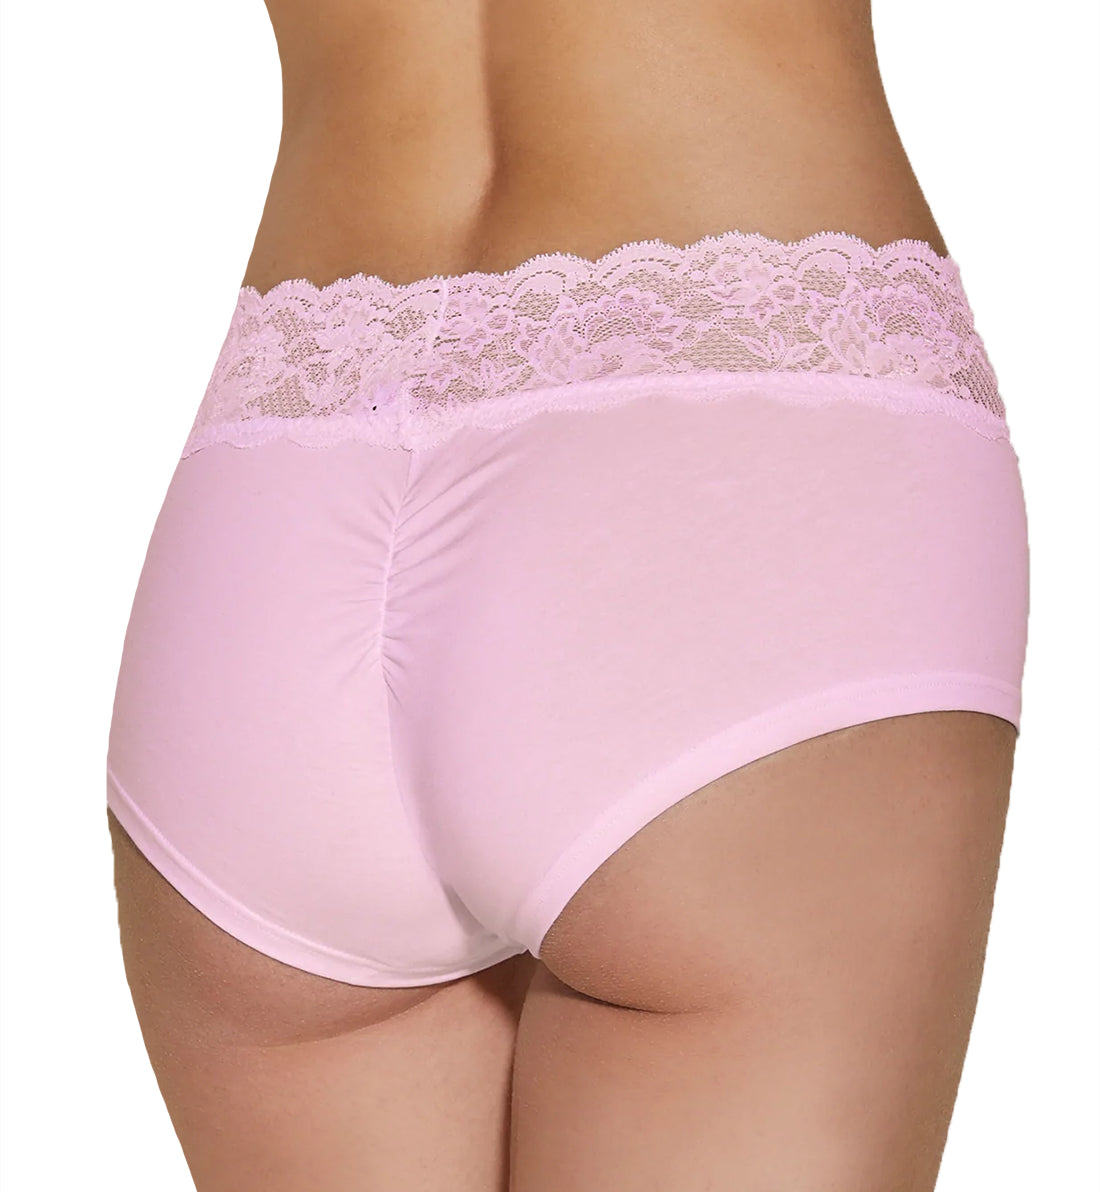 Cosabella Never Say Never Peachie Hotpant (NEVER0743),S/M,Jaipur Pink - Jaipur Pink,S/M